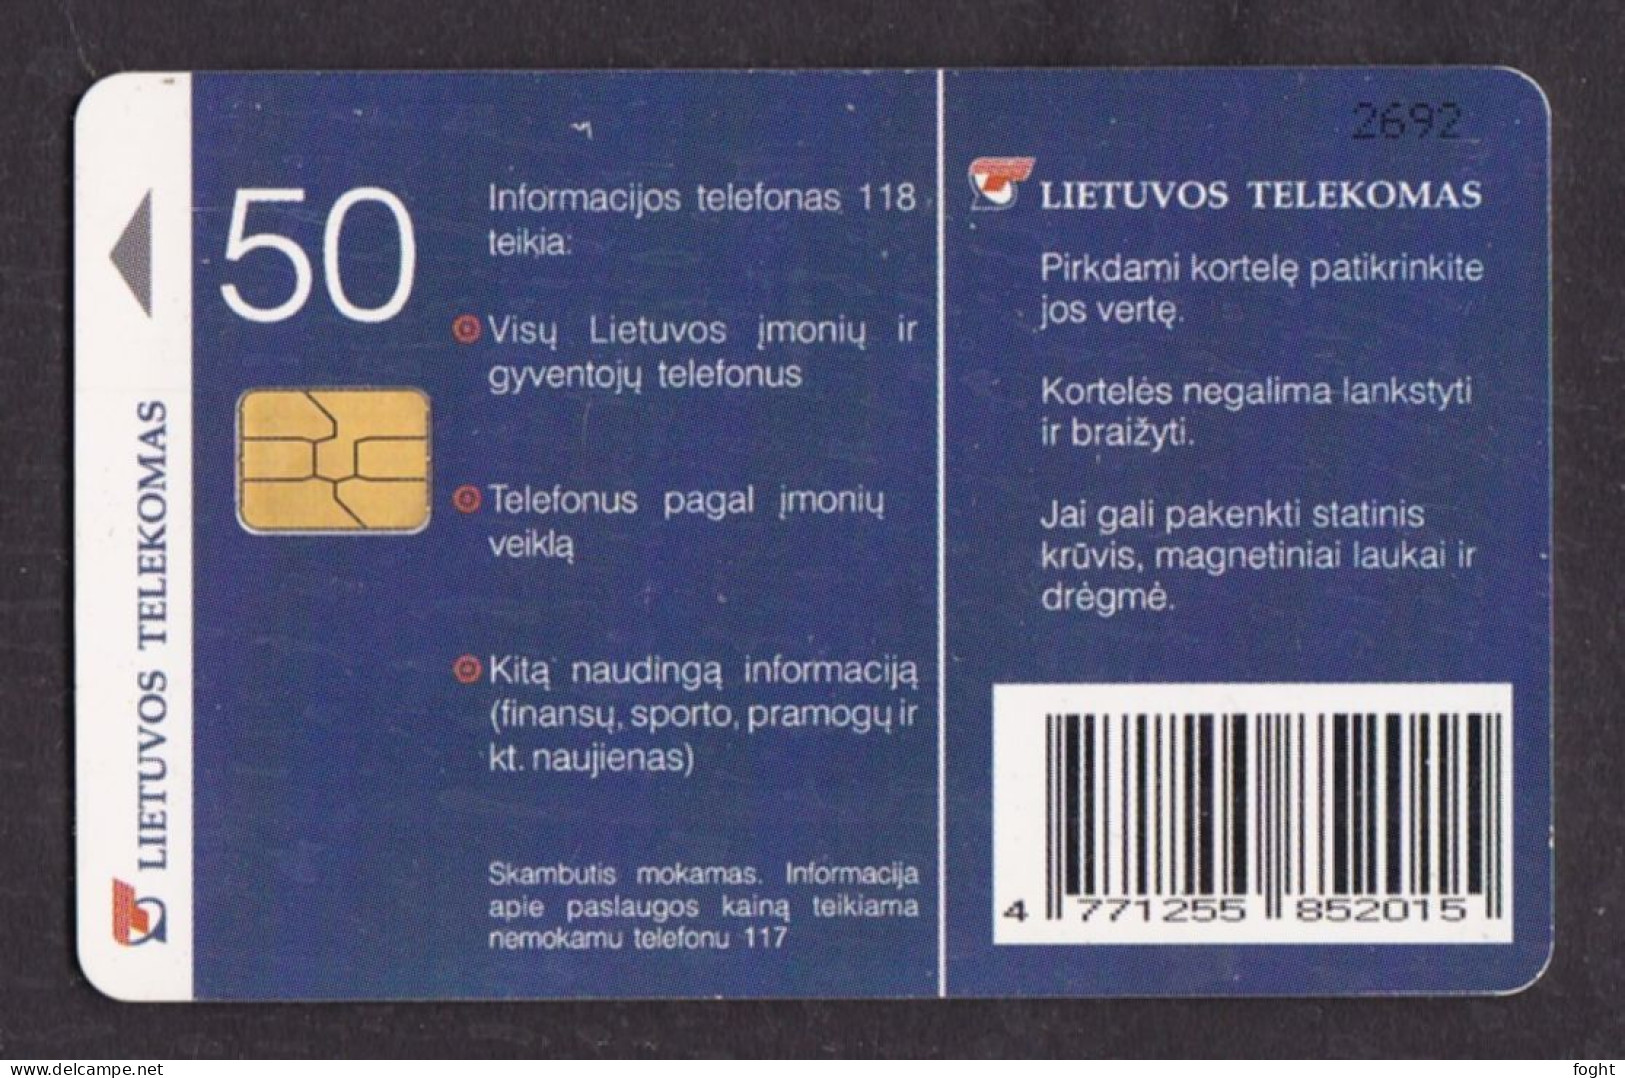 2001 Lietuvos Telekomas Chip Card 118 Information On Telephone 50 Units,Col:LT-LTV-C064 - Litauen